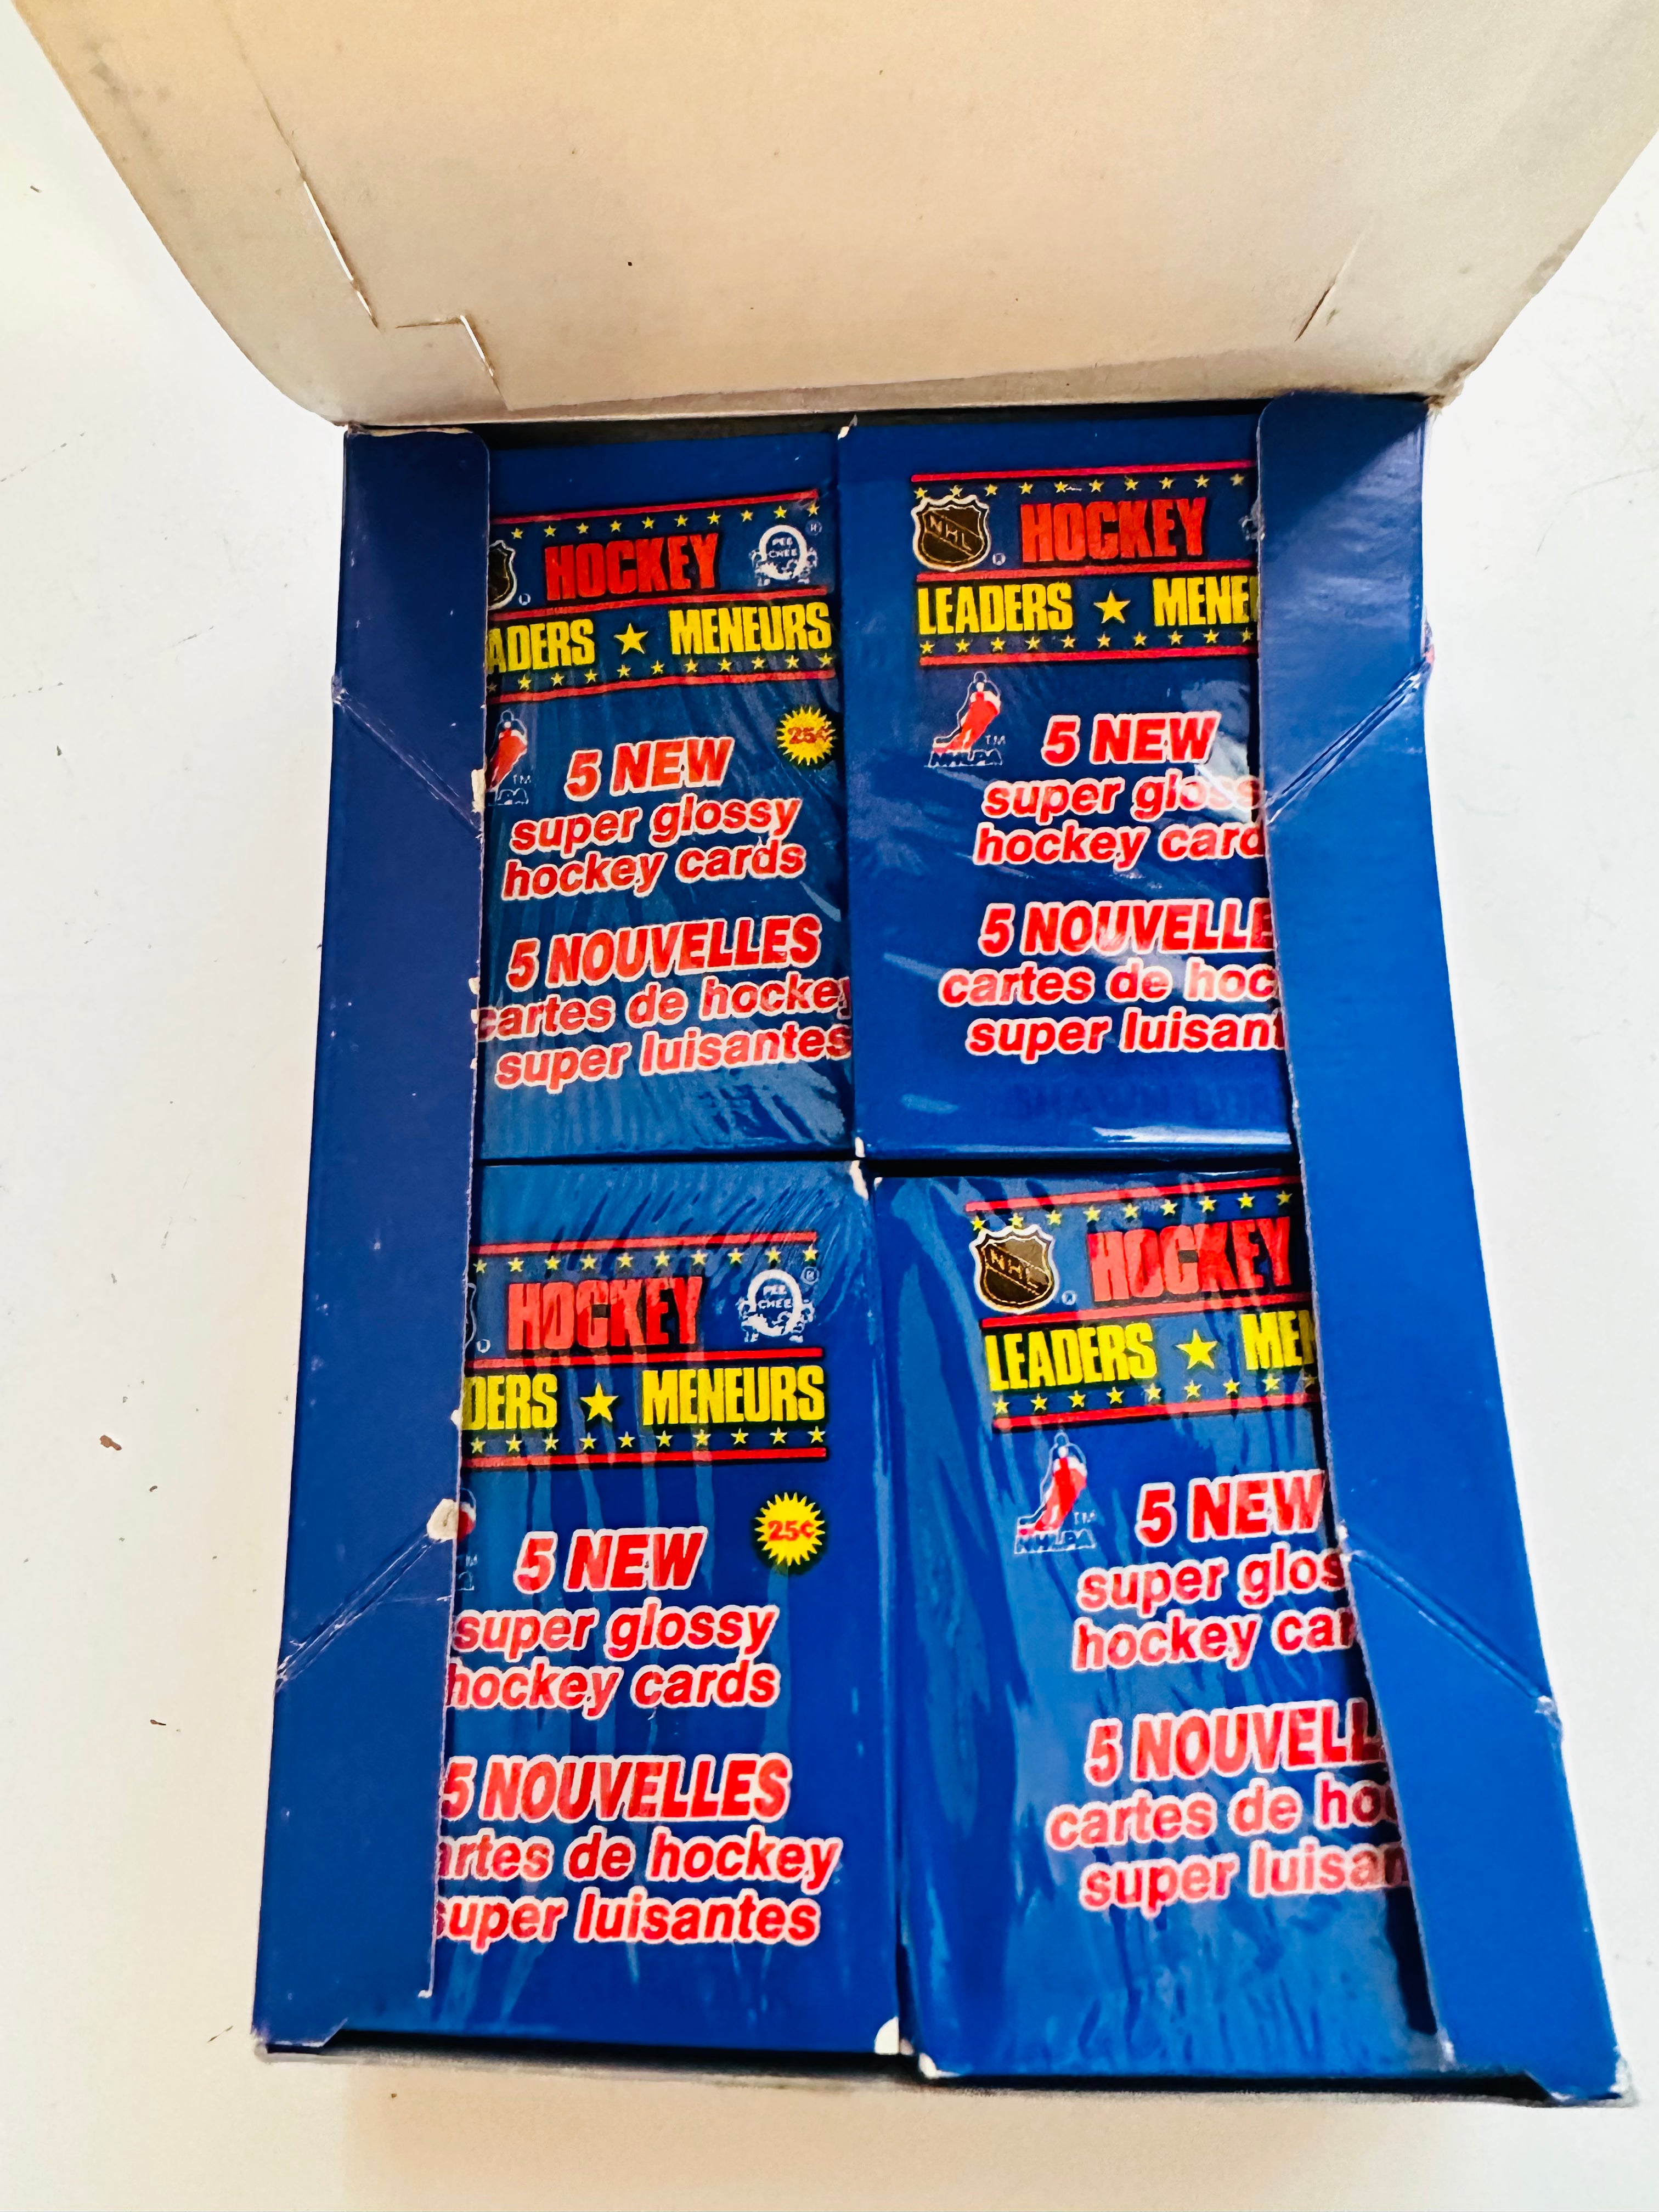 Hockey Leaders Opc cards 48 packs box 1987